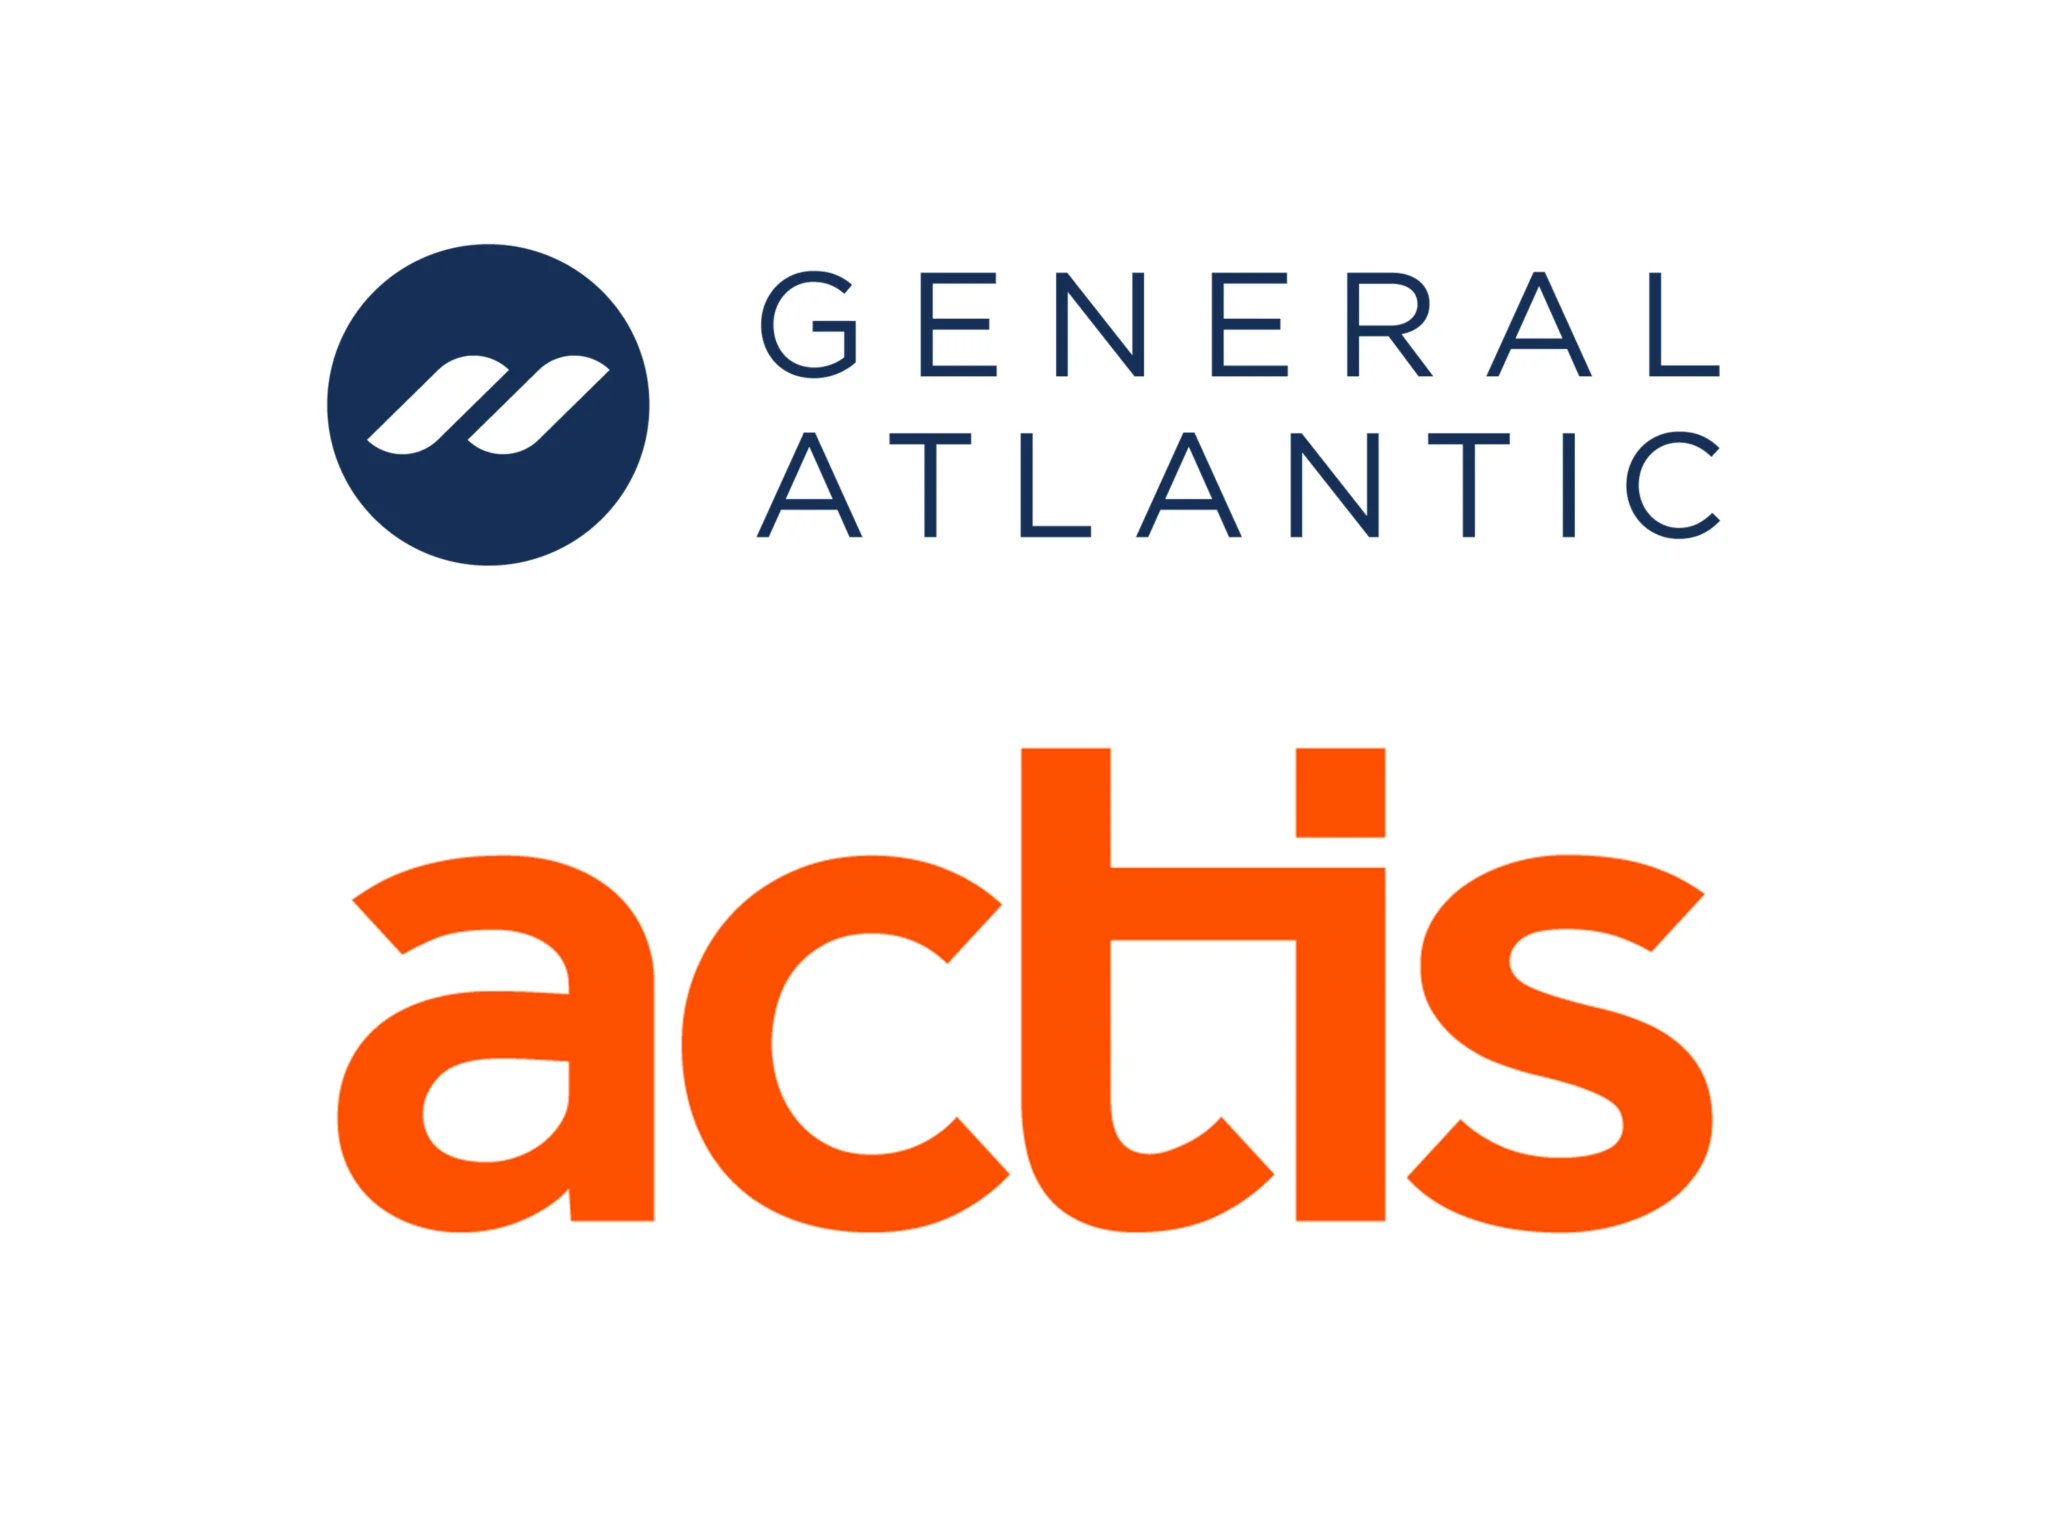 General Atlantic acquires Actis forming a $96 billion global investment platform